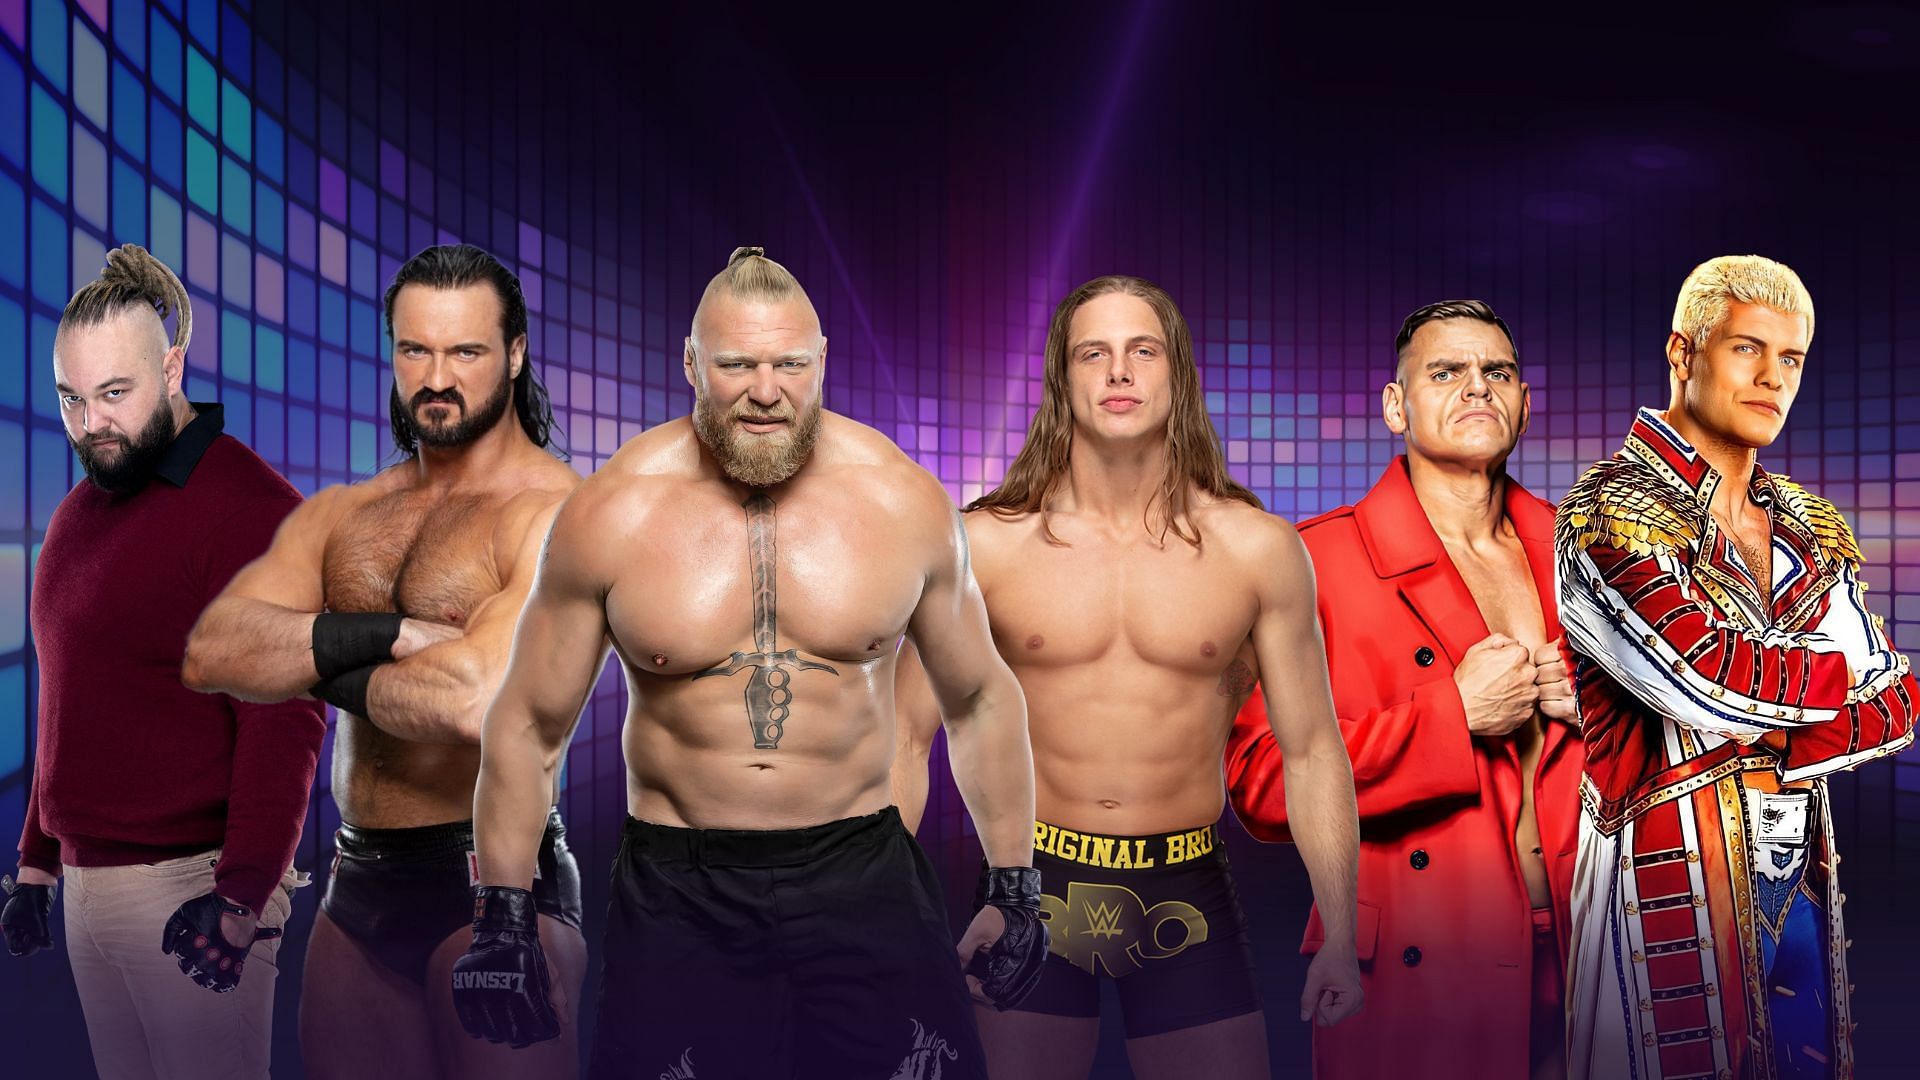 WWE Superstars Bray Wyatt, Drew McIntyre, Brock Lesnar, Matt Riddle, Gunther, and Cody Rhodes